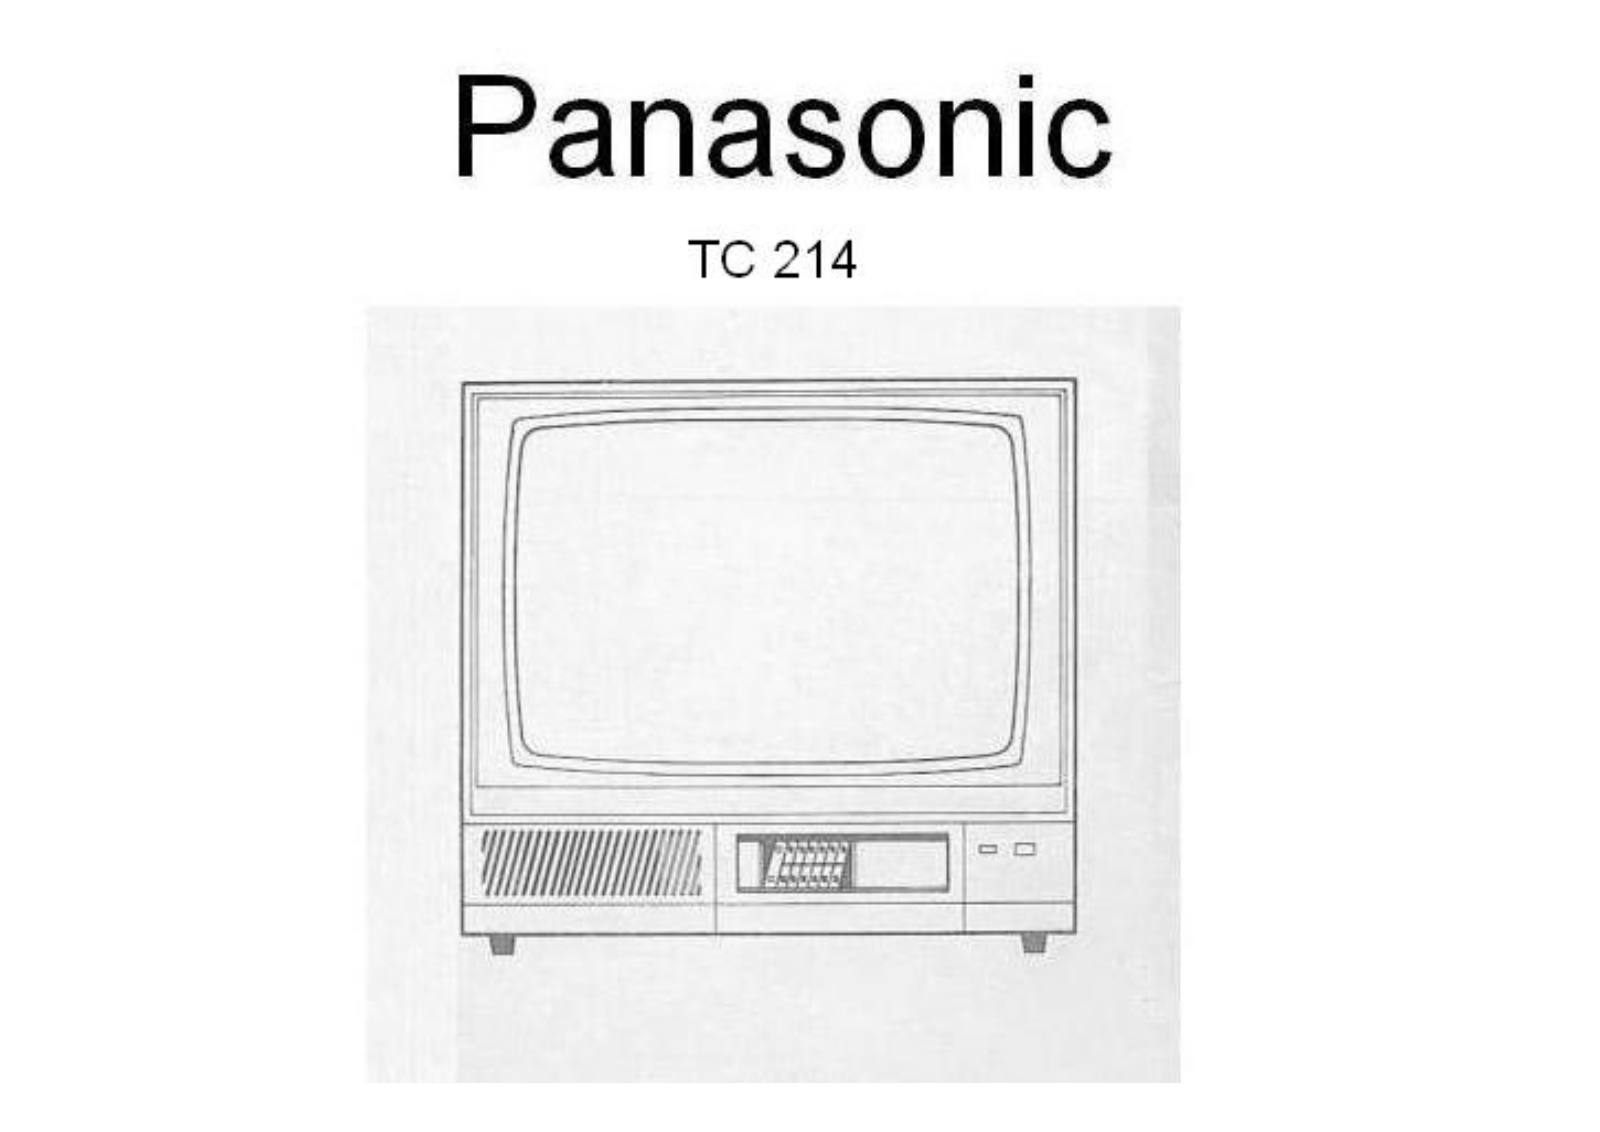 Panasonic TC214 Schematic